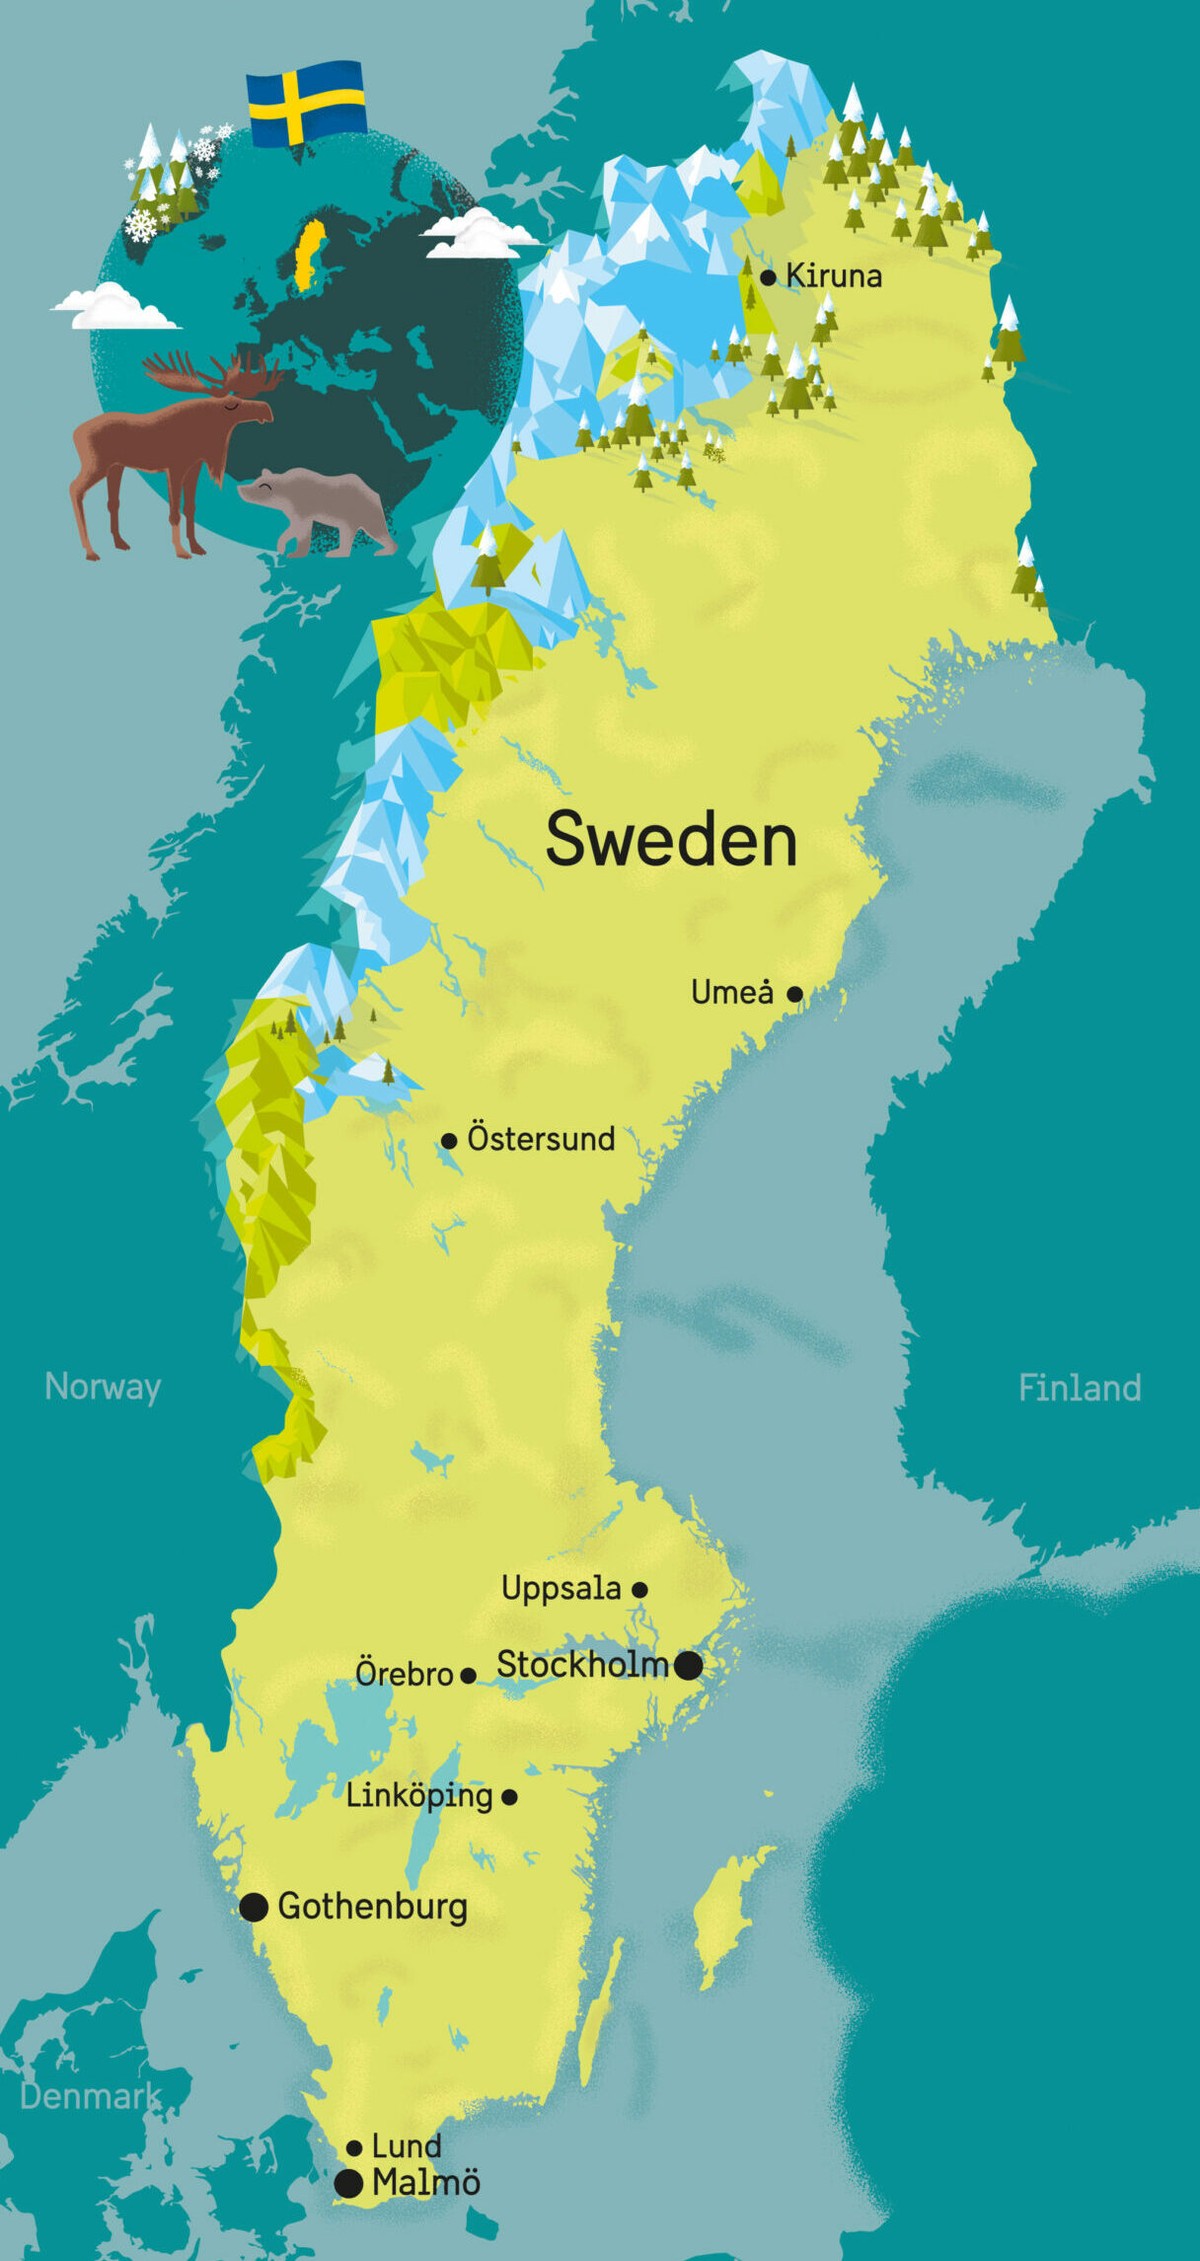 /_next/image?url=https%3A%2F%2Fcms.sweden